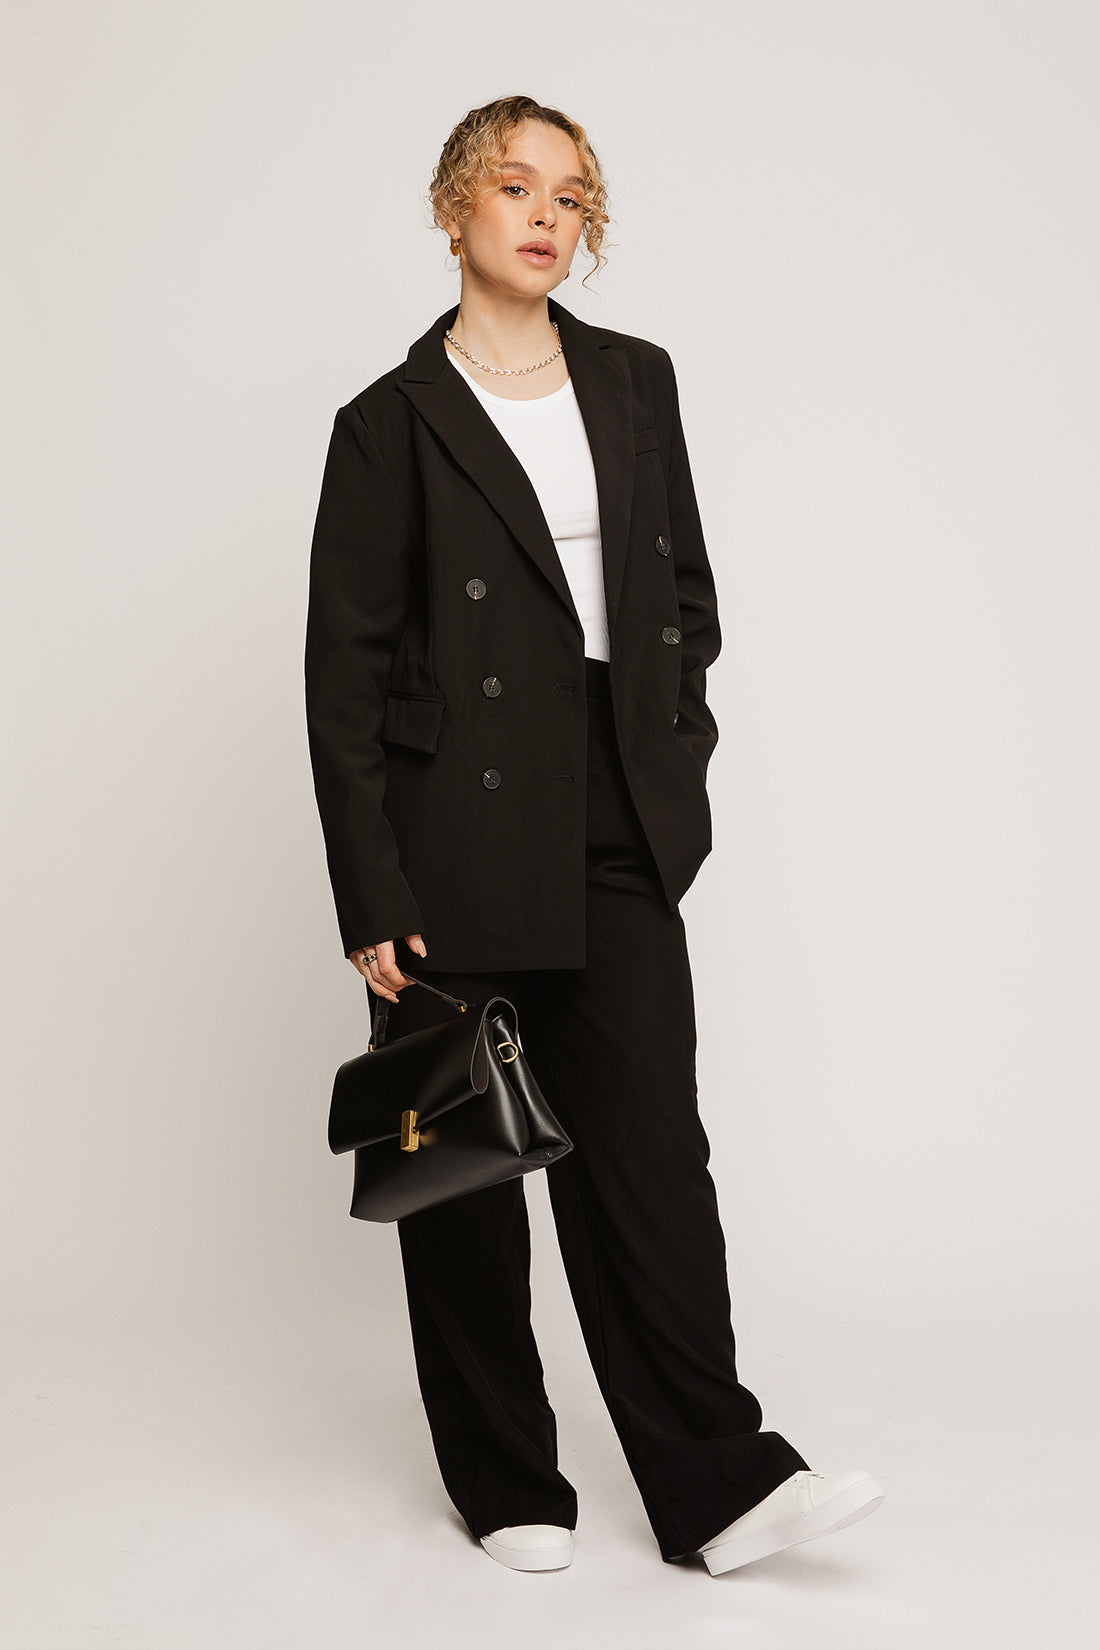 Everleigh Black Suit Jacket - Sugar + Style